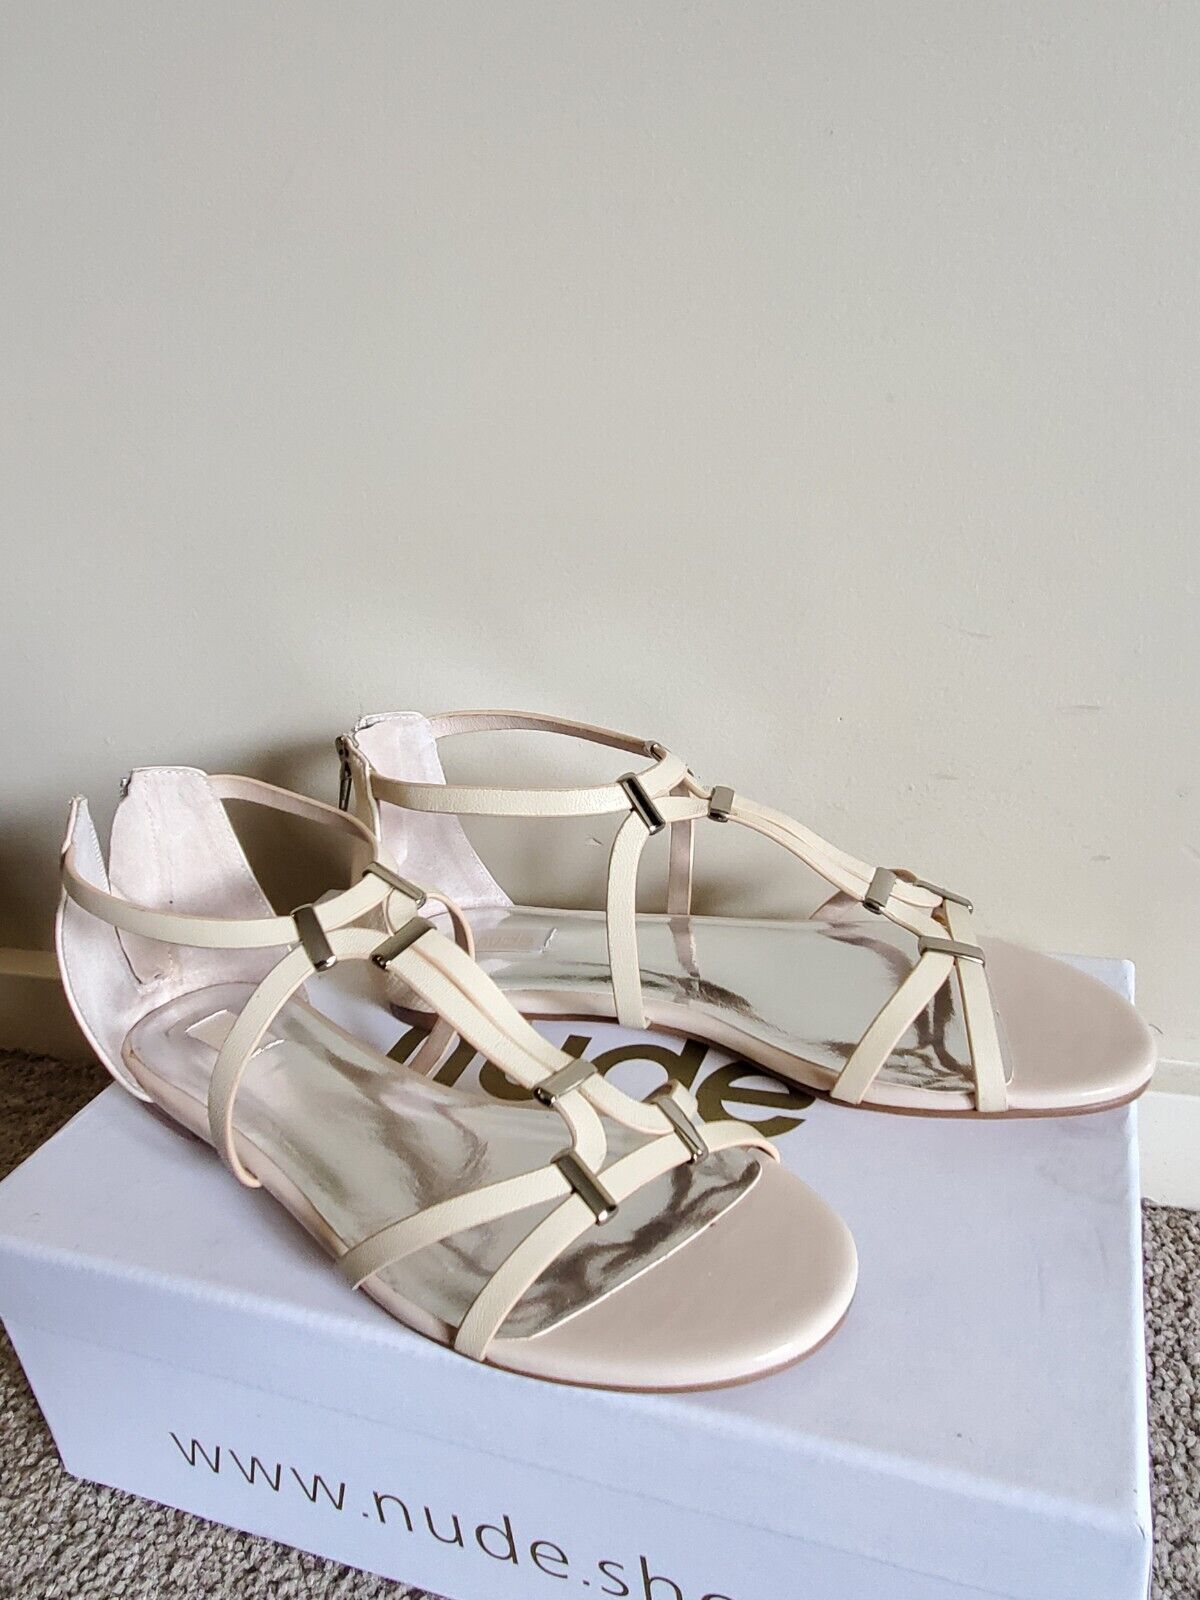 NUDE footwear joyful cream strappy pretty leather sandals size 38 7 new in box 